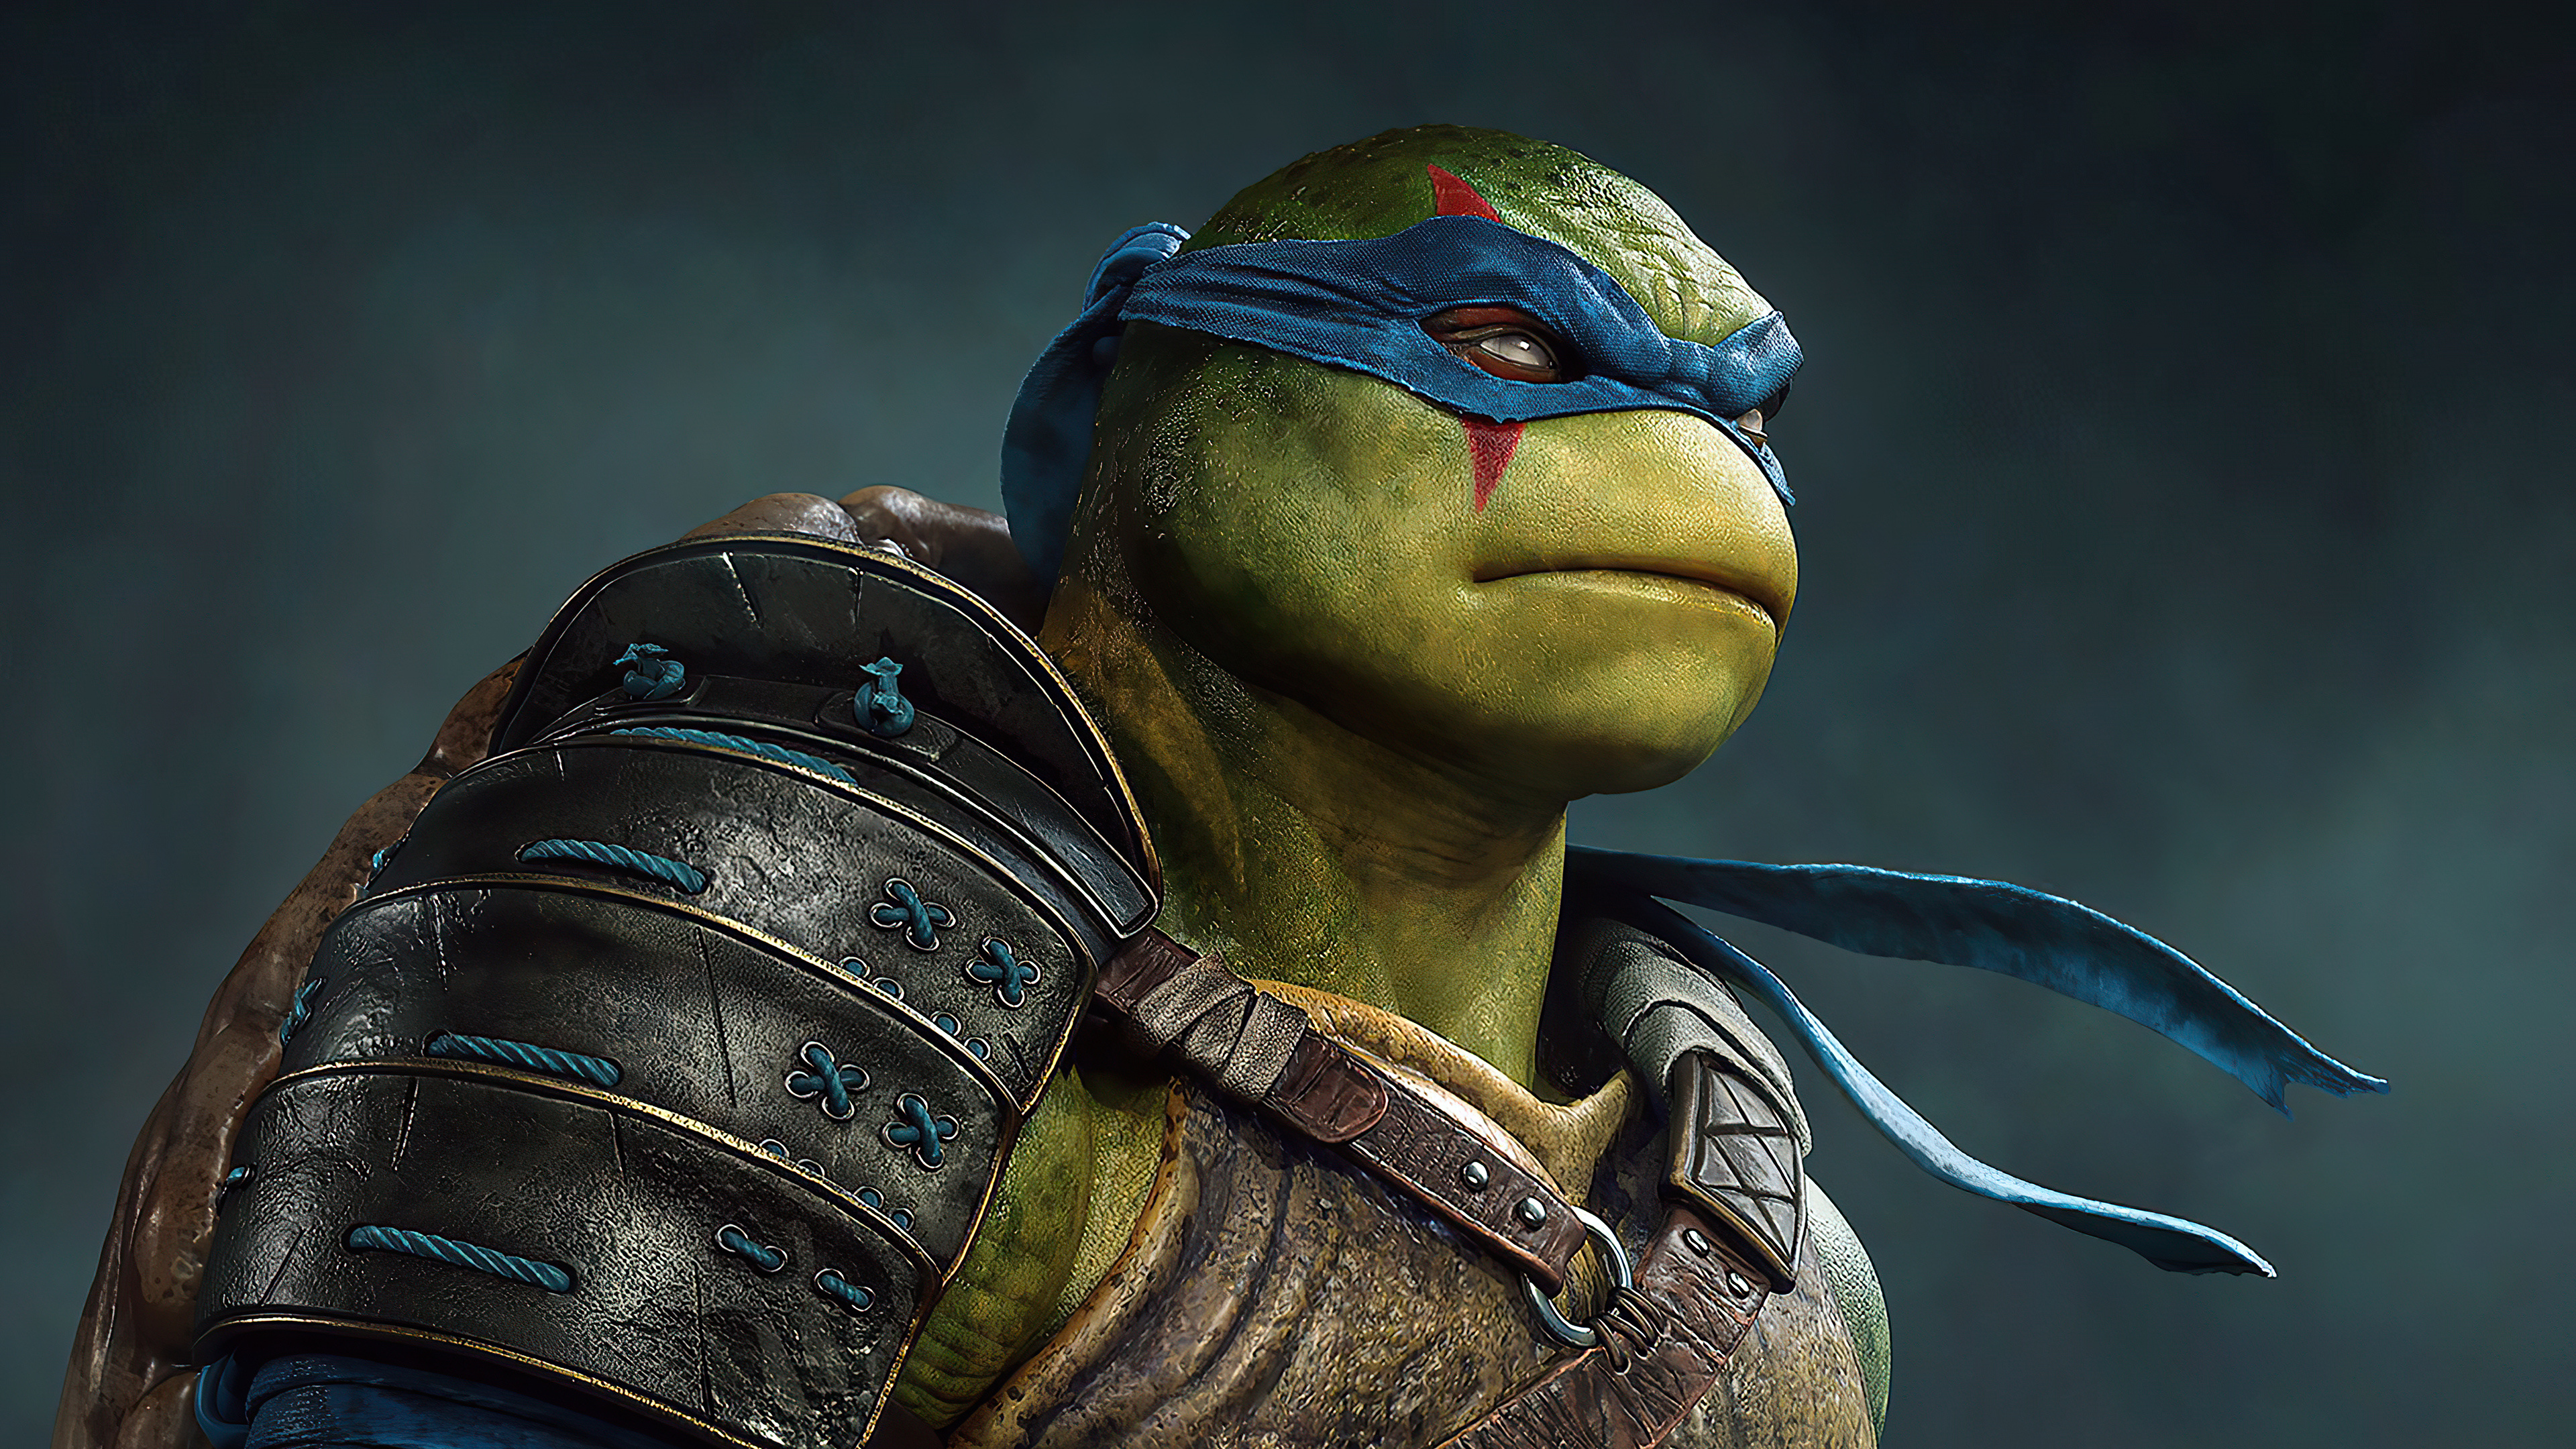 Mutant Ninja Turtles, HD wallpapers, Ninja turtle art, 4K, 3840x2160 4K Desktop